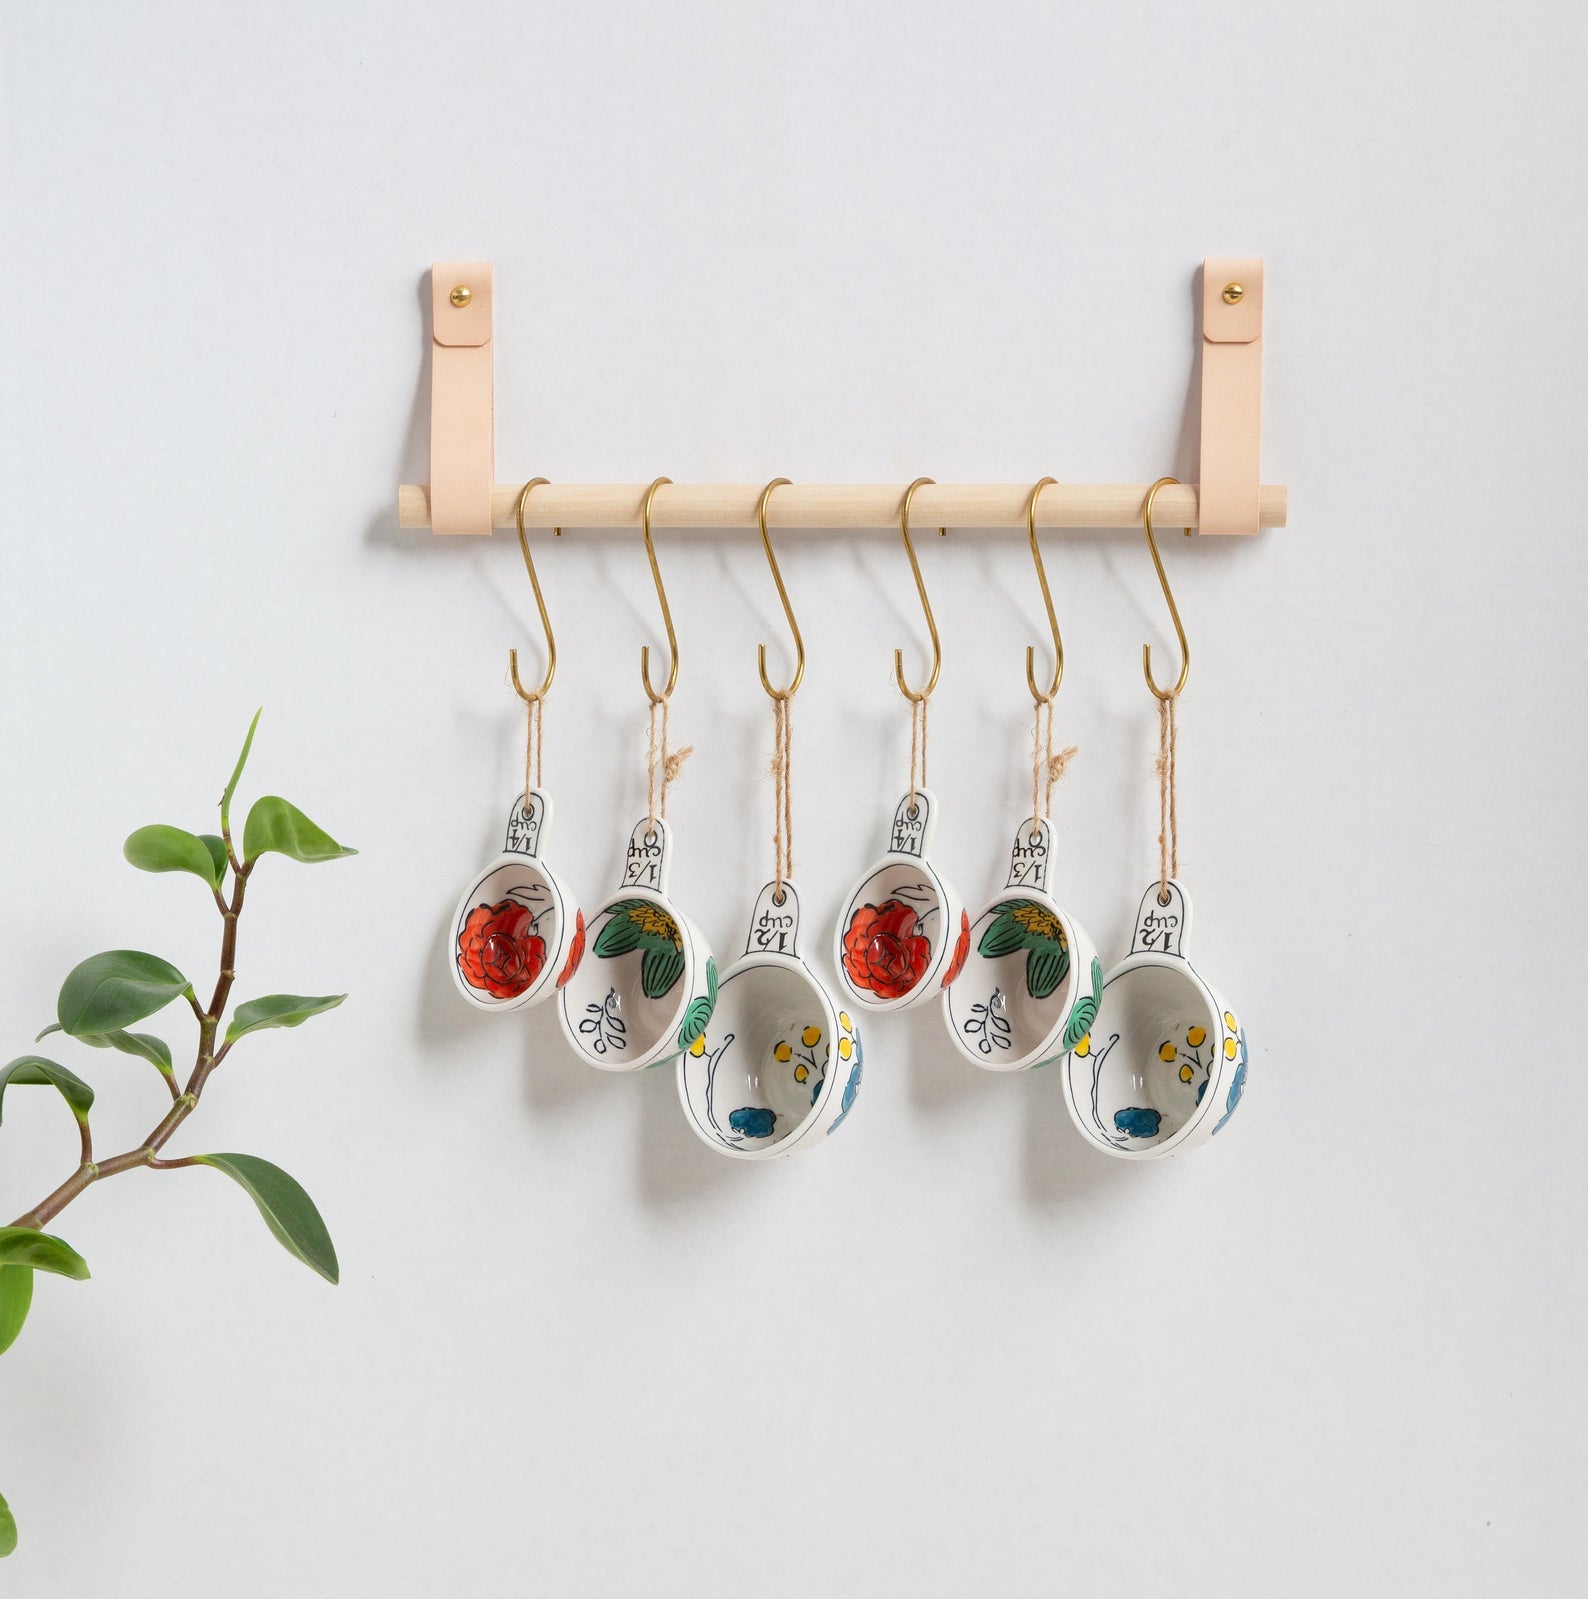 Hanging kitchen utensil organizer